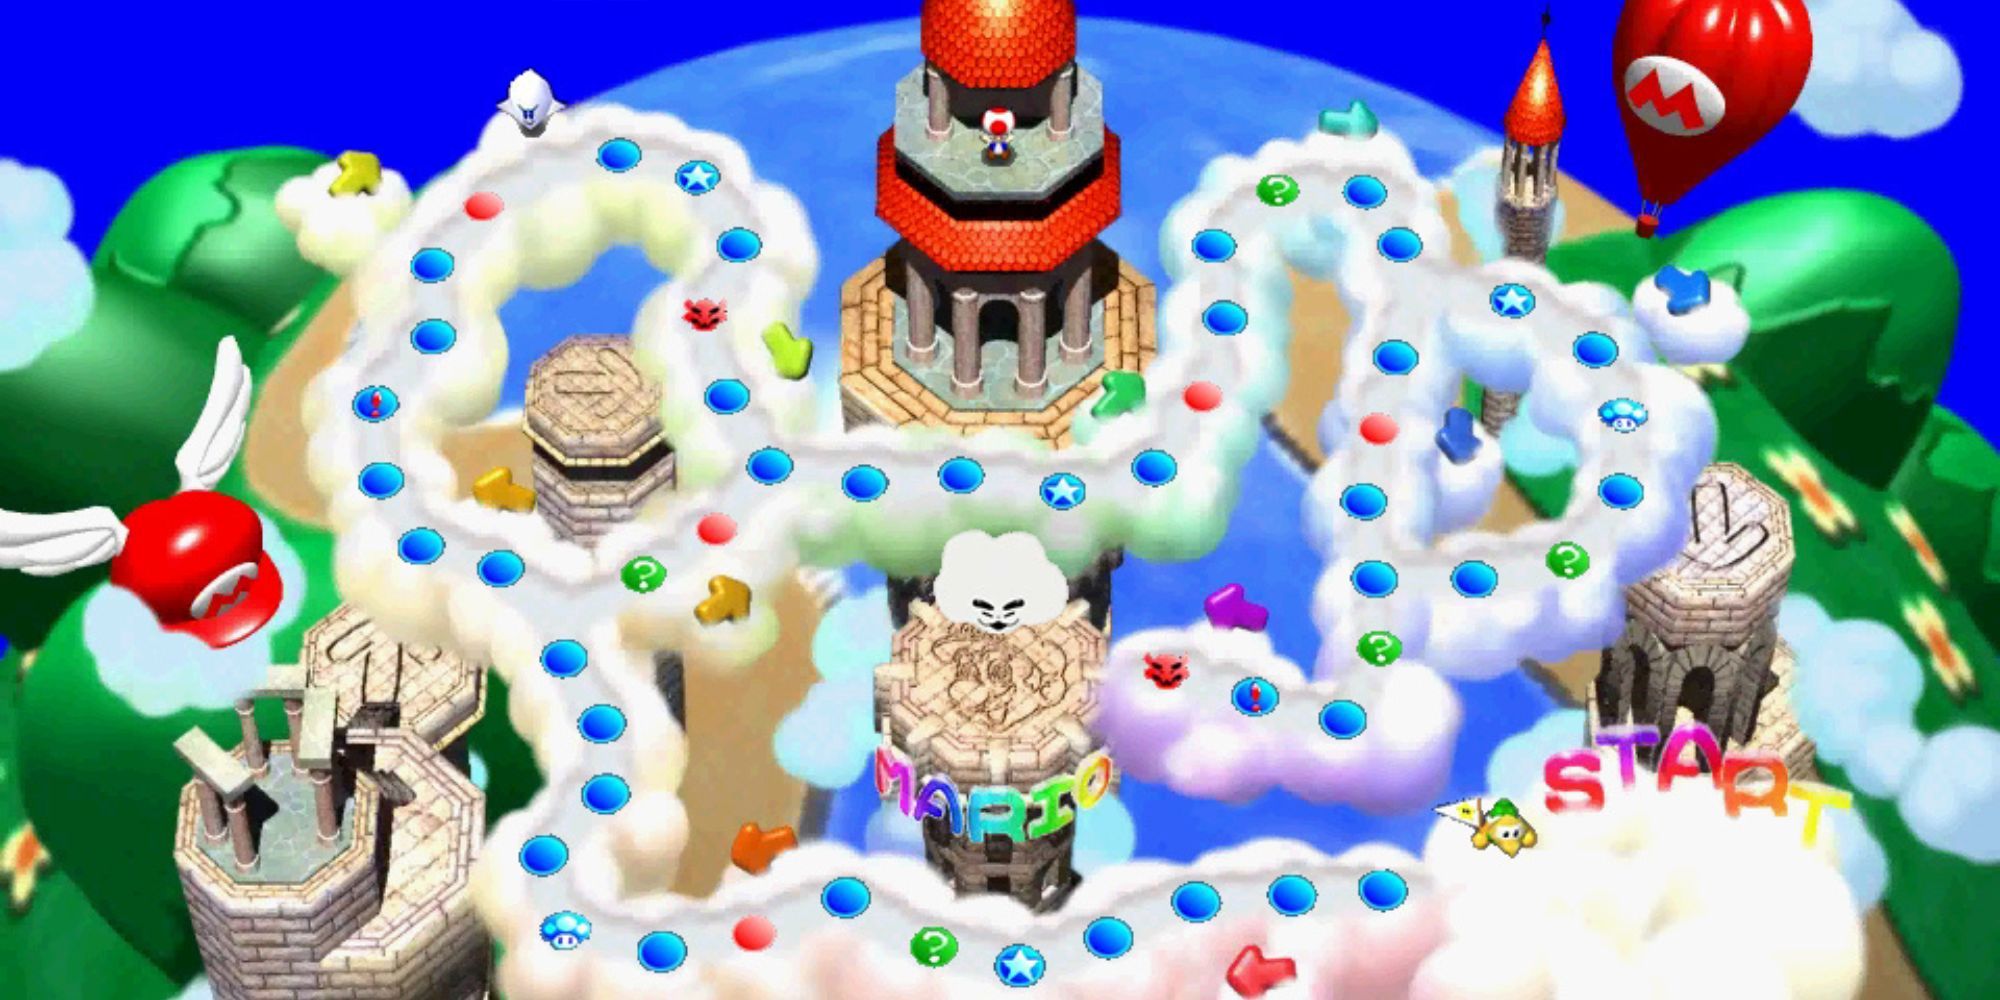 An overhead view of Mario's Rainbow Castle